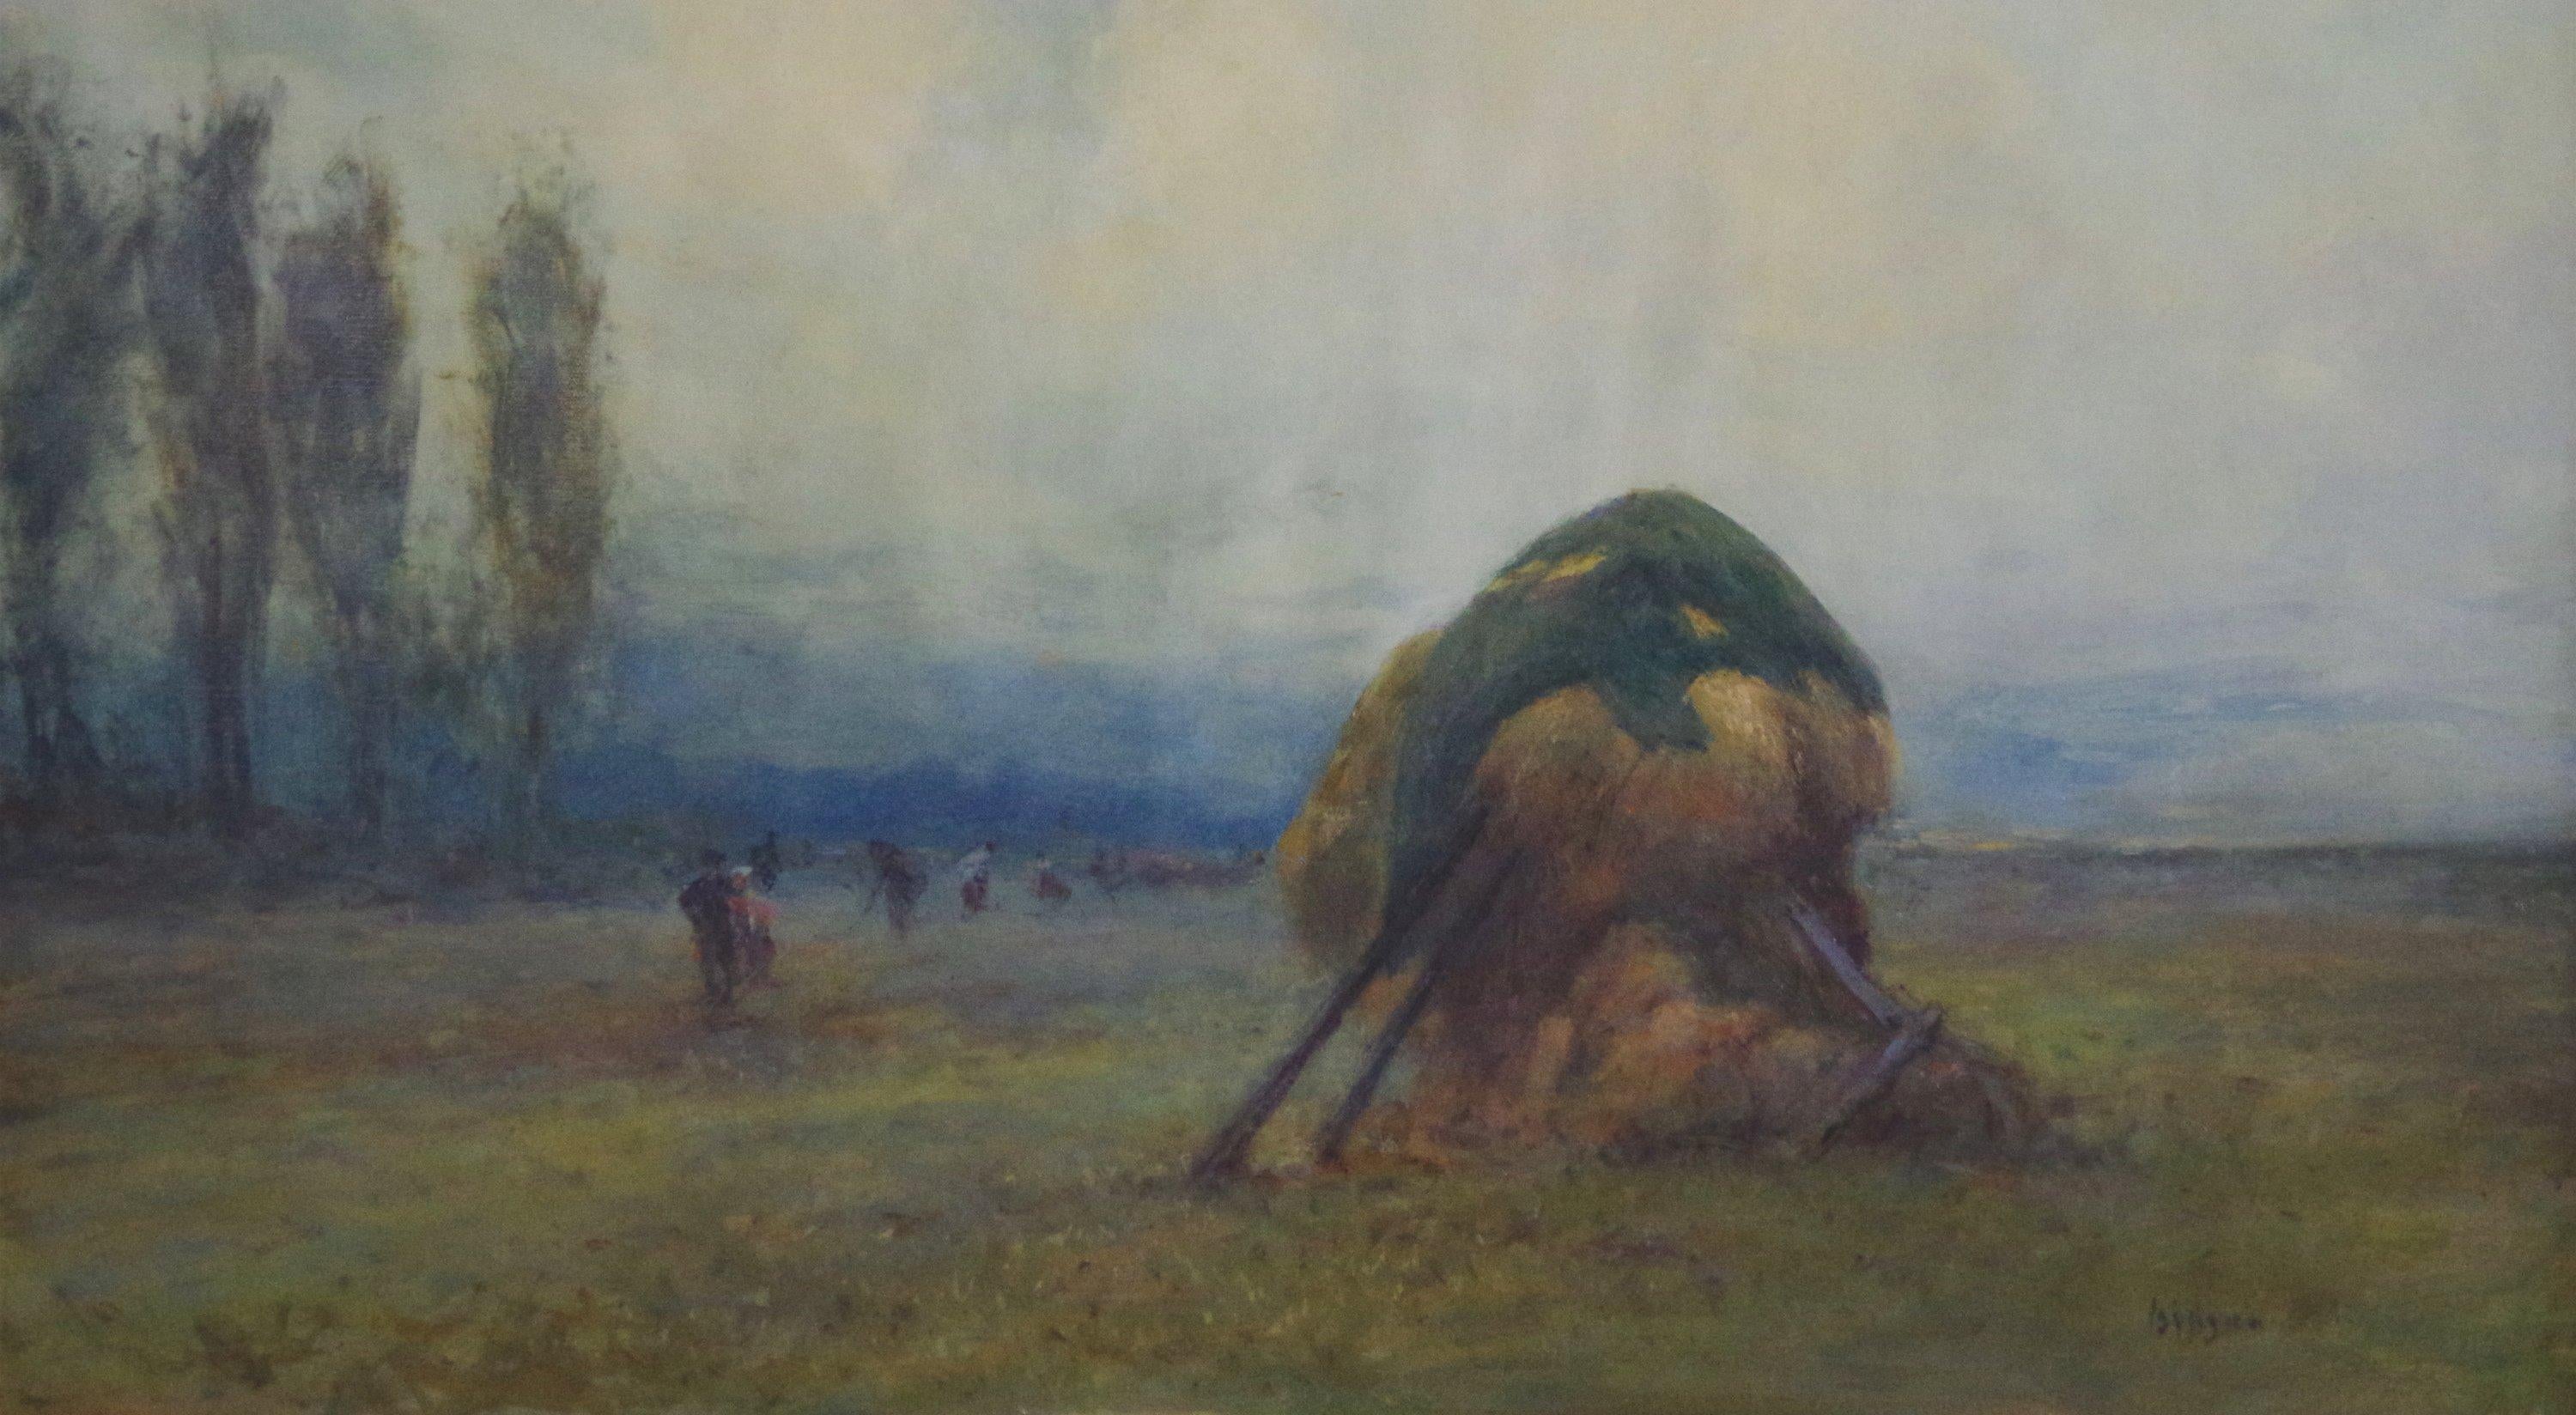 Stock of Wheat - Painting by Karen Darbinyan